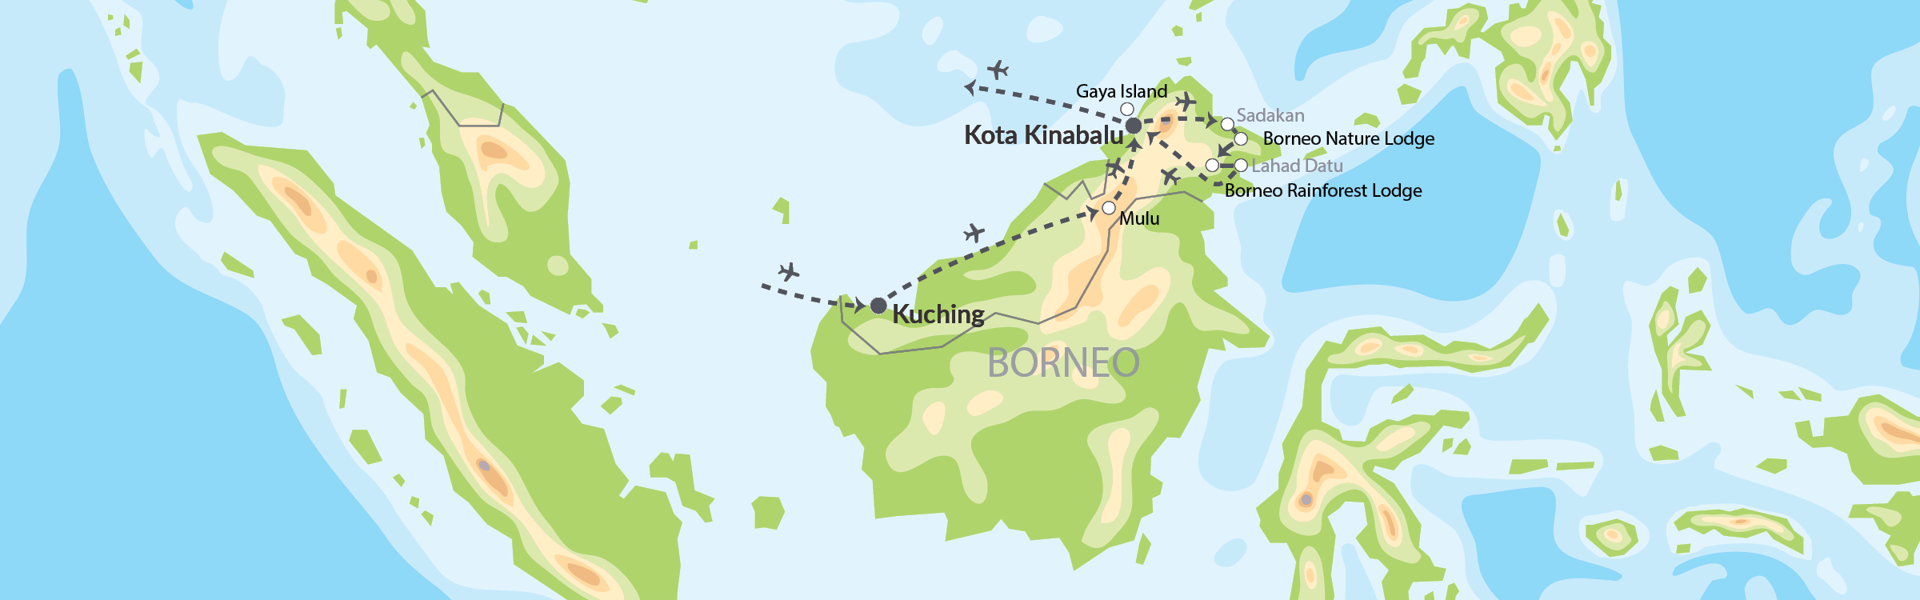 96610 Borneo Regnskov, Sandstrand Og Unikt Dyreliv